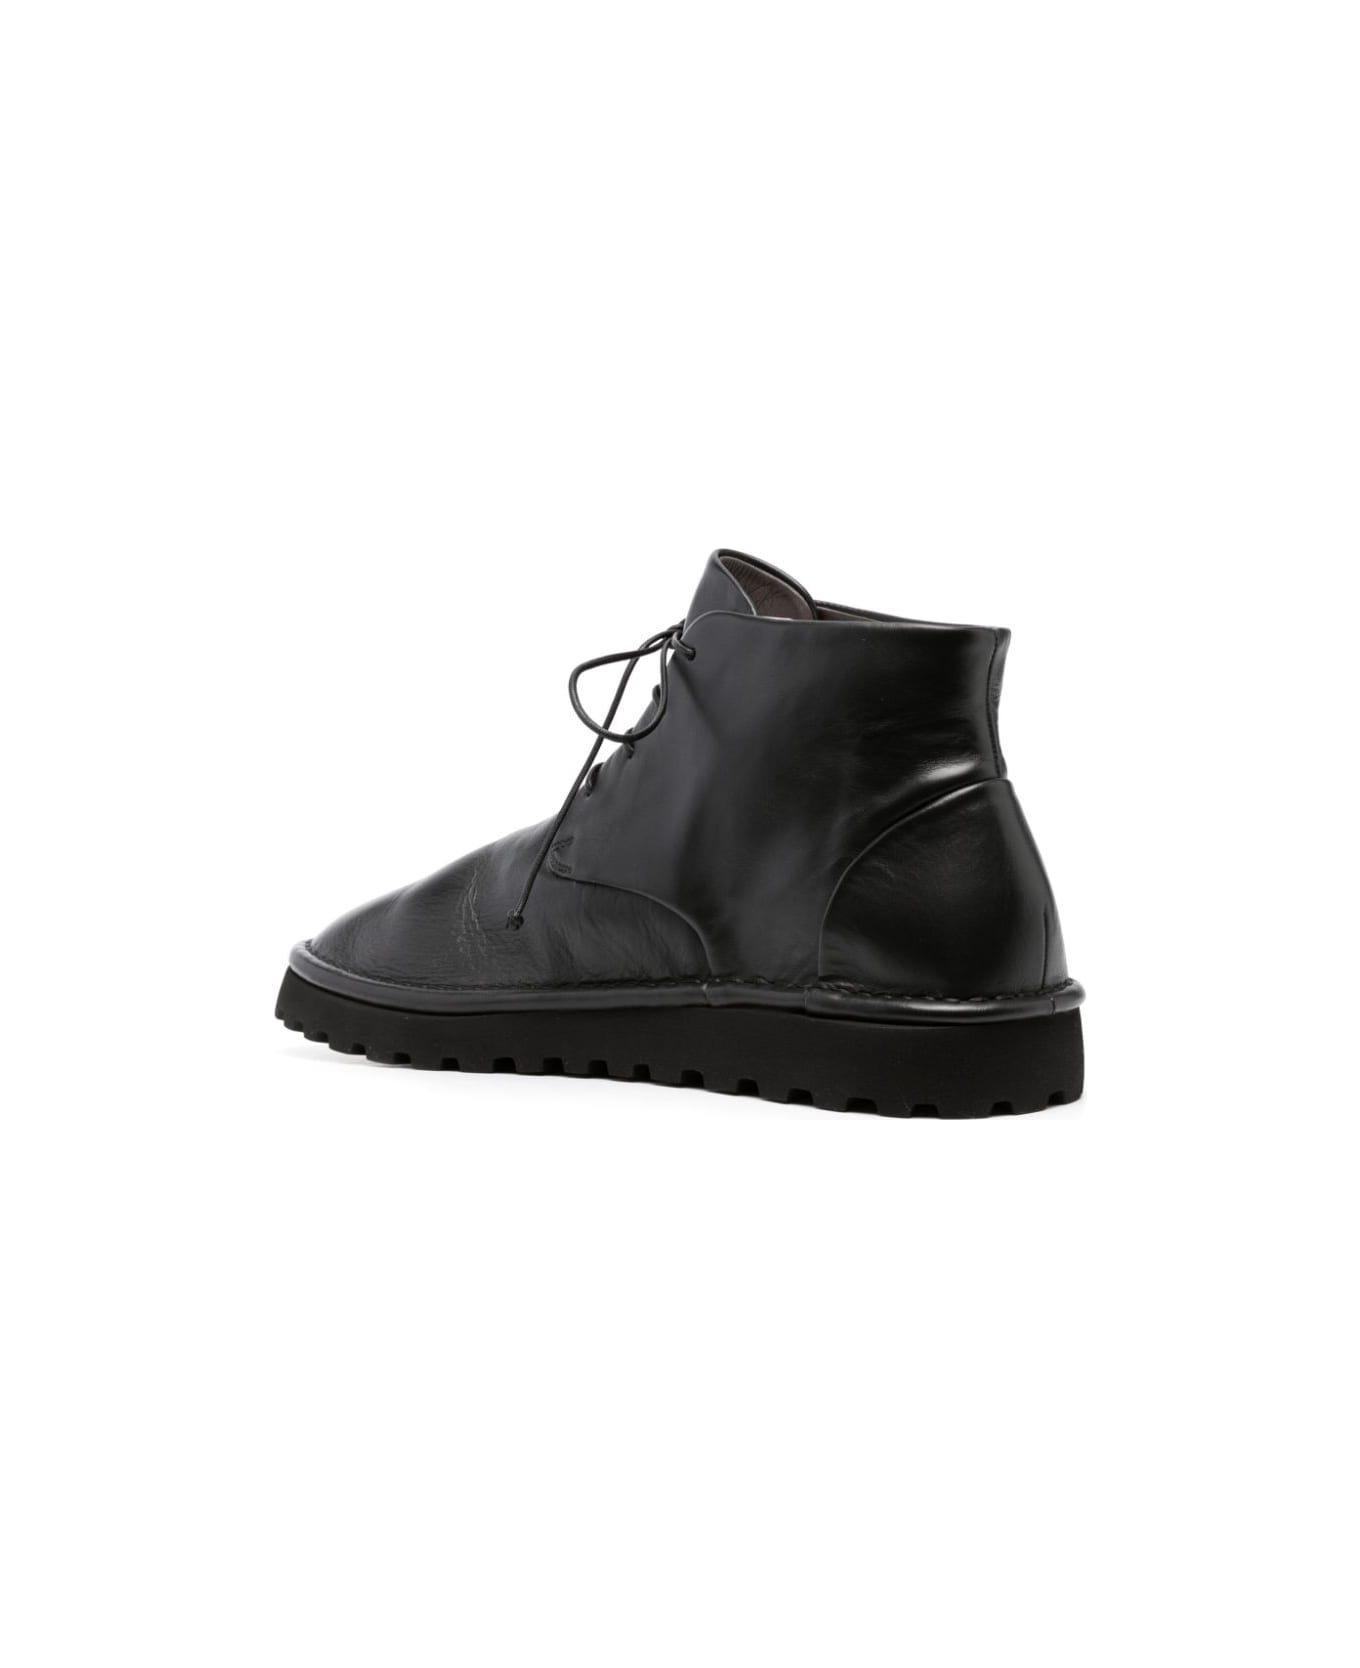 Marsell Sancrispa Alta Pomice Ankle Boots - Black